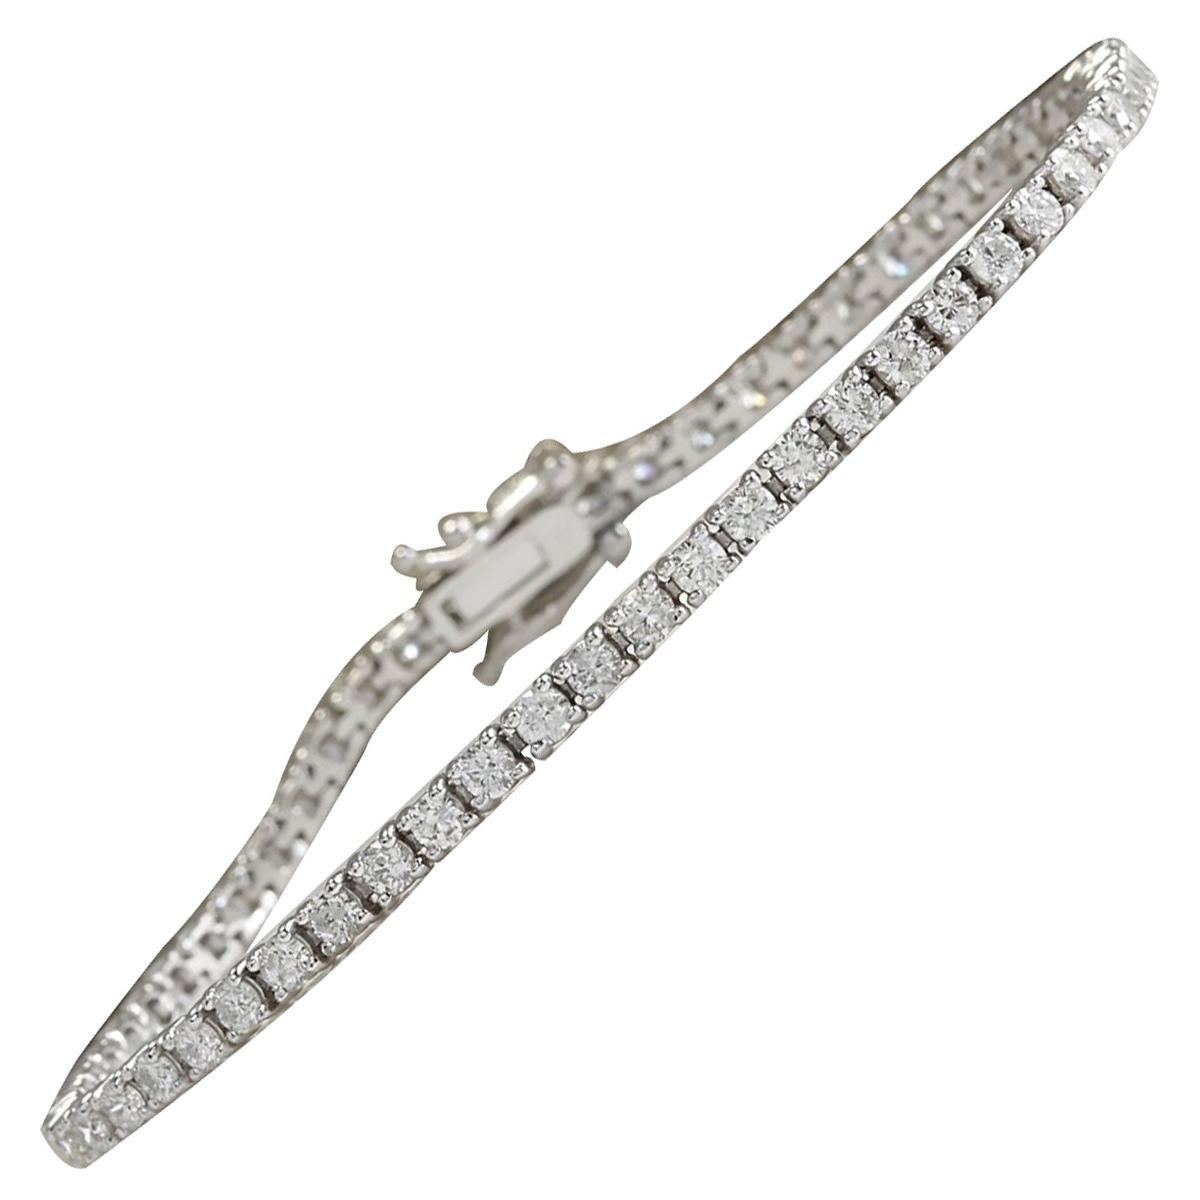 3.50 Carat Diamond 18 Karat White Gold Bracelet